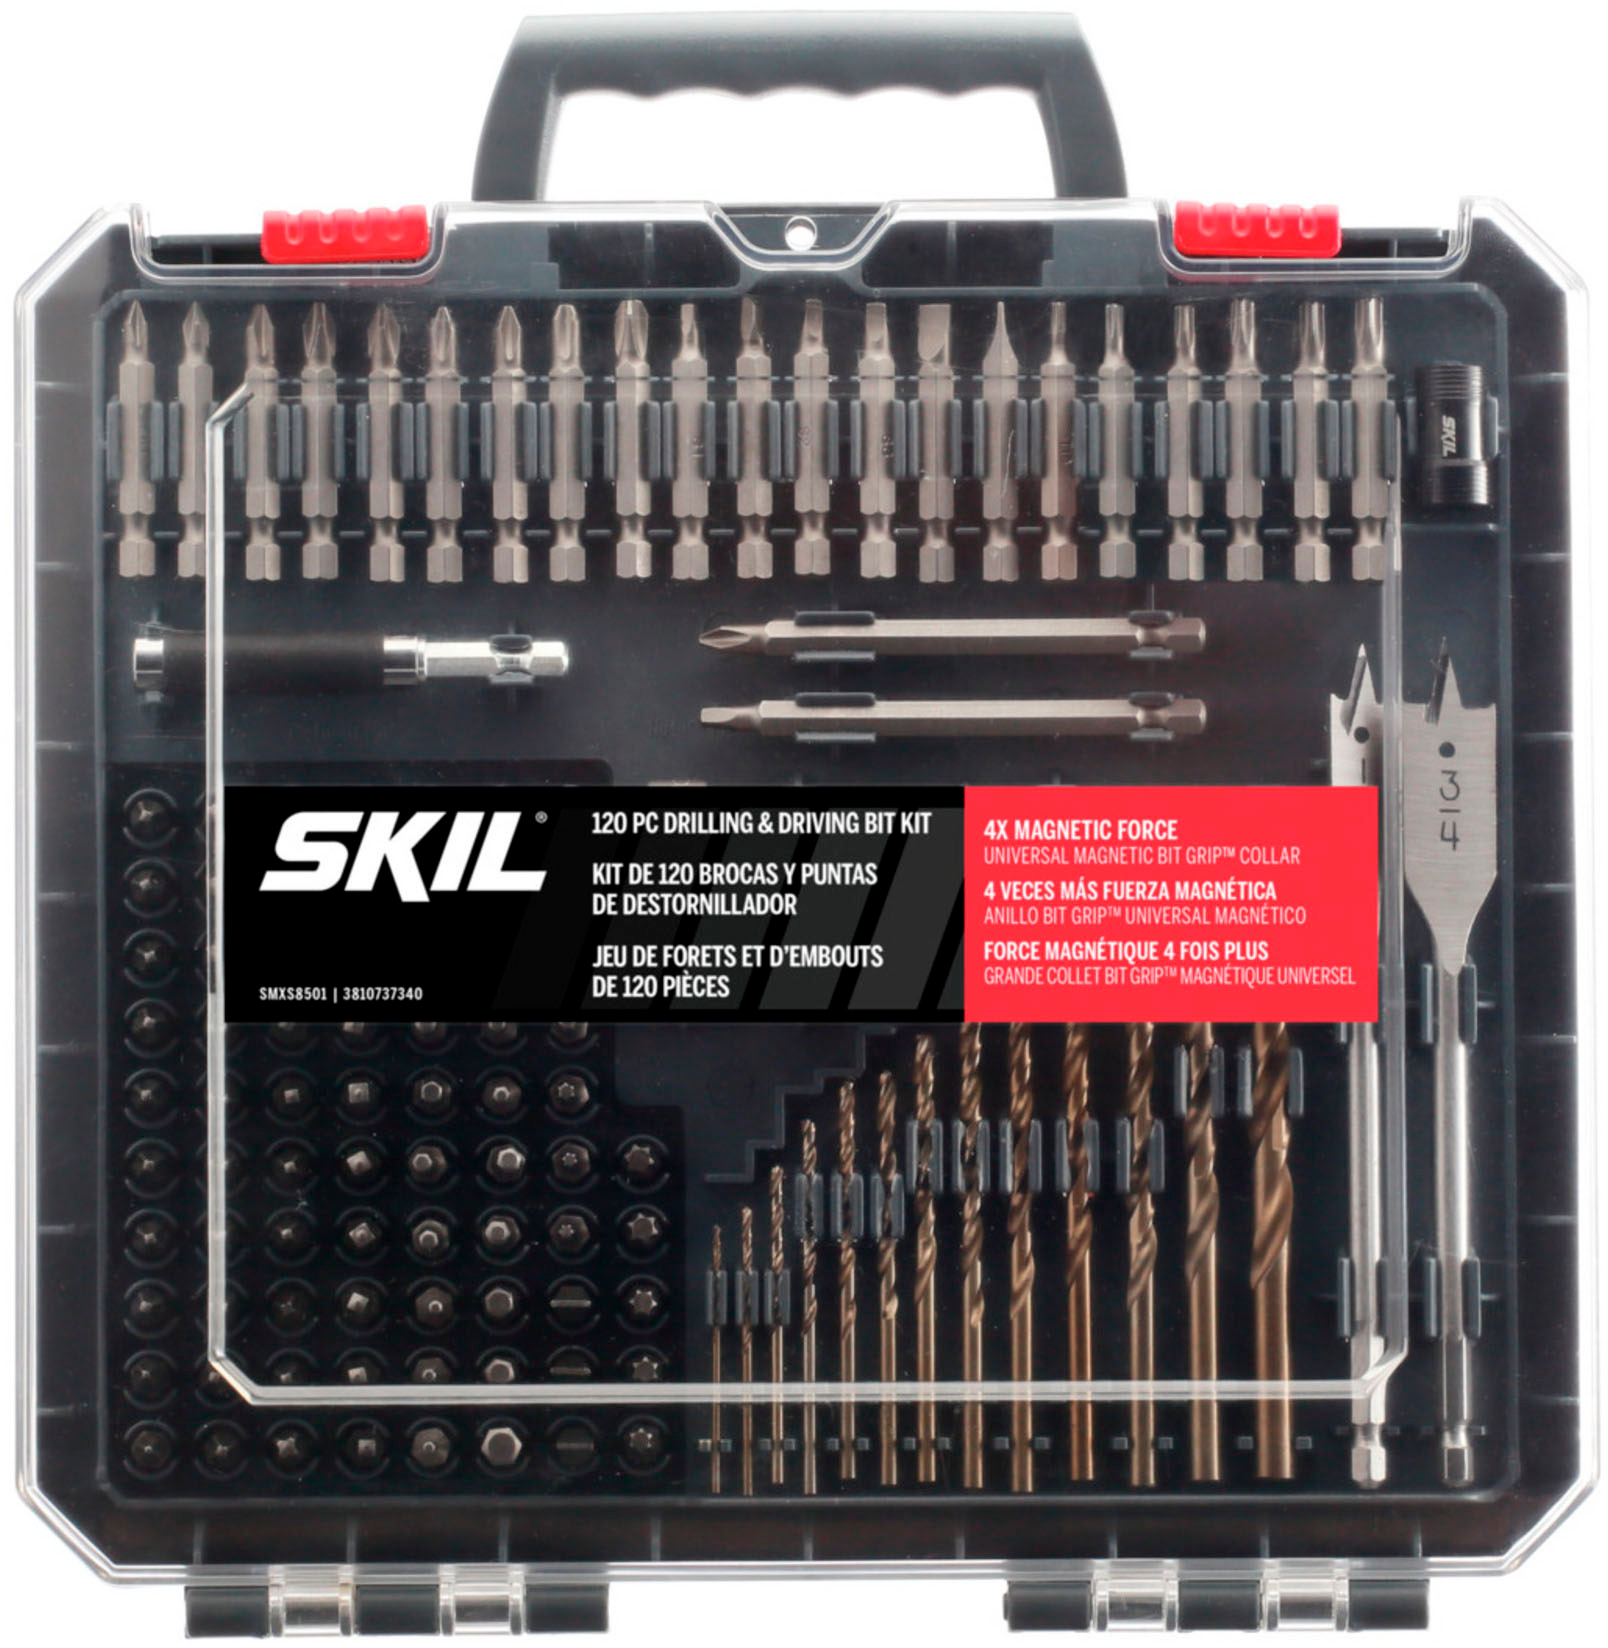 erwt herfst Voorstel Skil 120-Pc Drilling & Driving Bit Set SMXS8501 - Best Buy